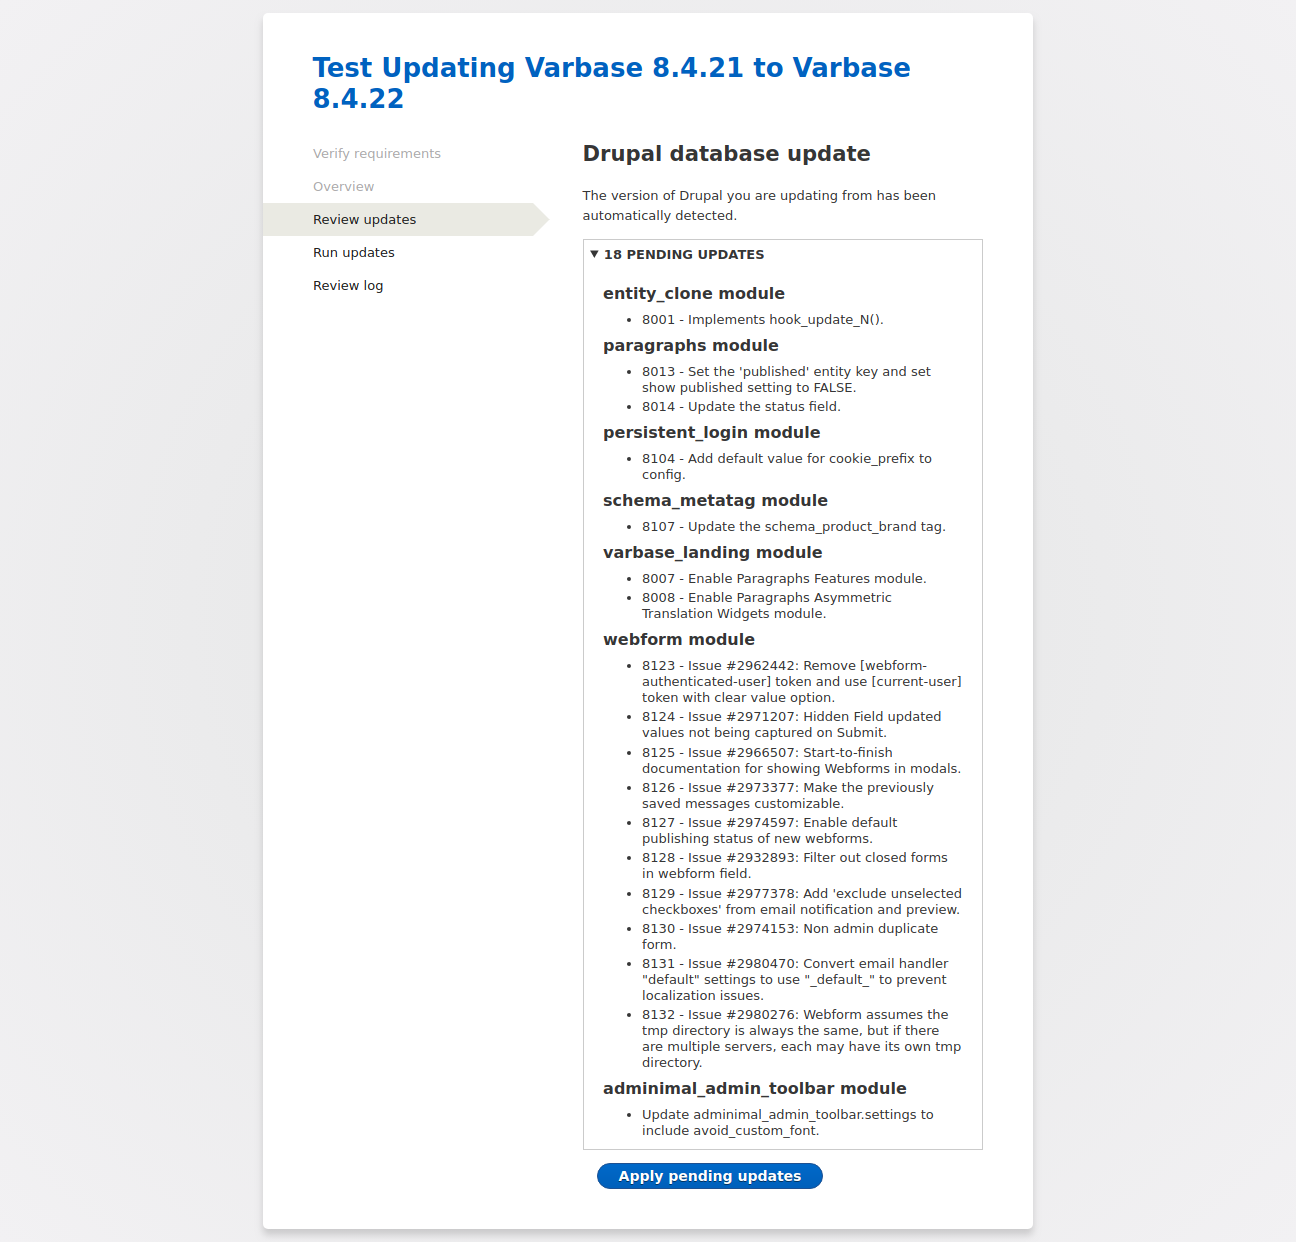 Test Updating Varbase 8.4.21 to Varbase 8.4.22